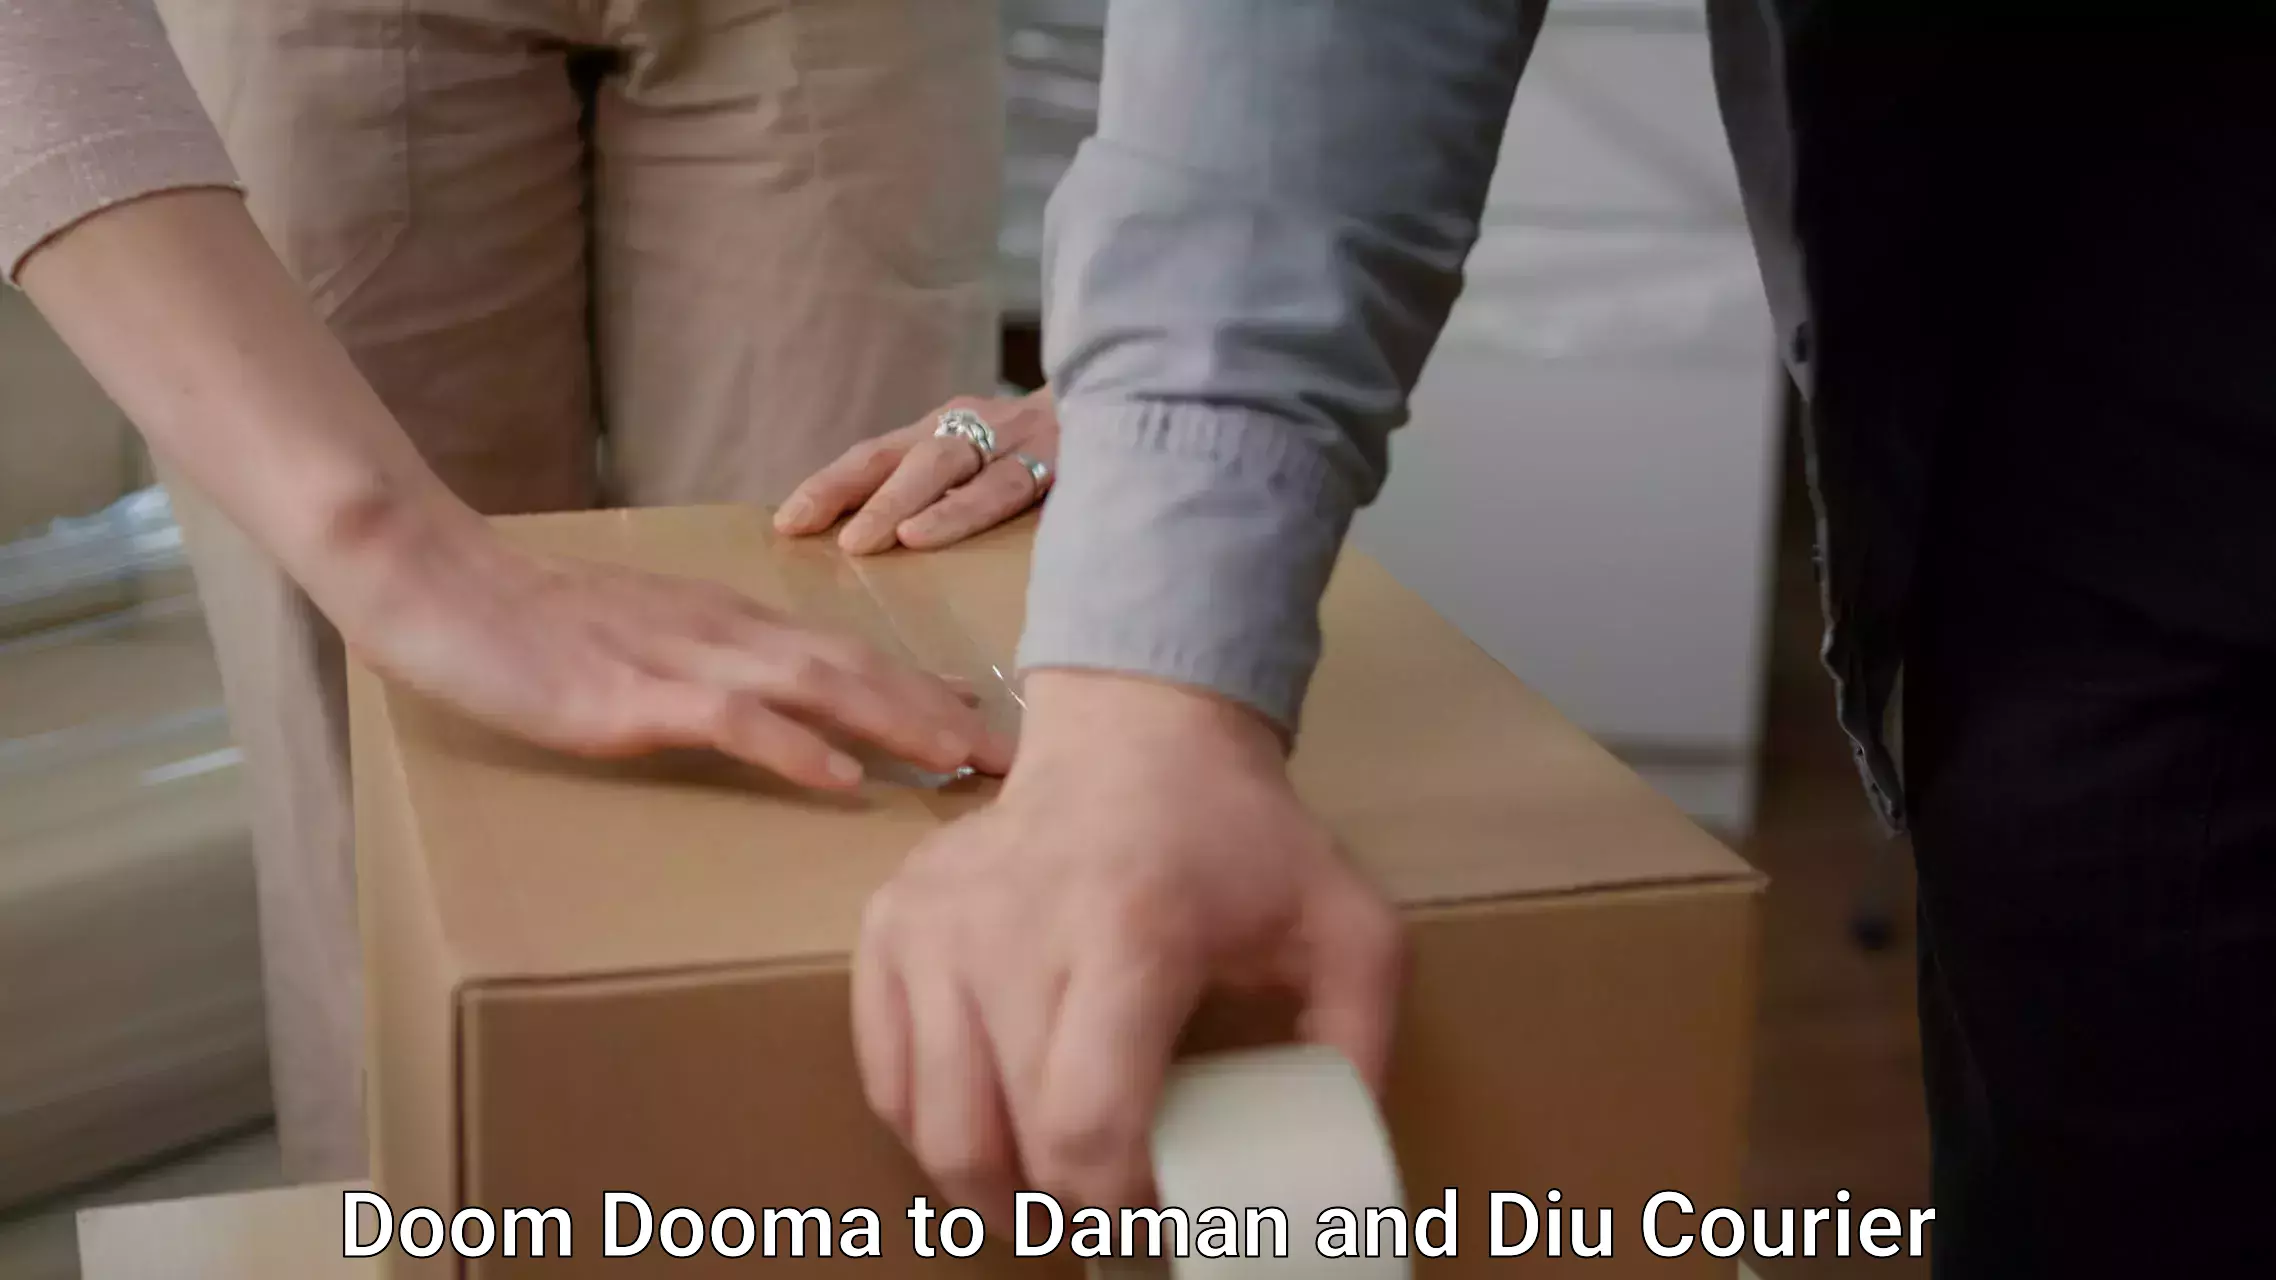 Home furniture shifting in Doom Dooma to Diu